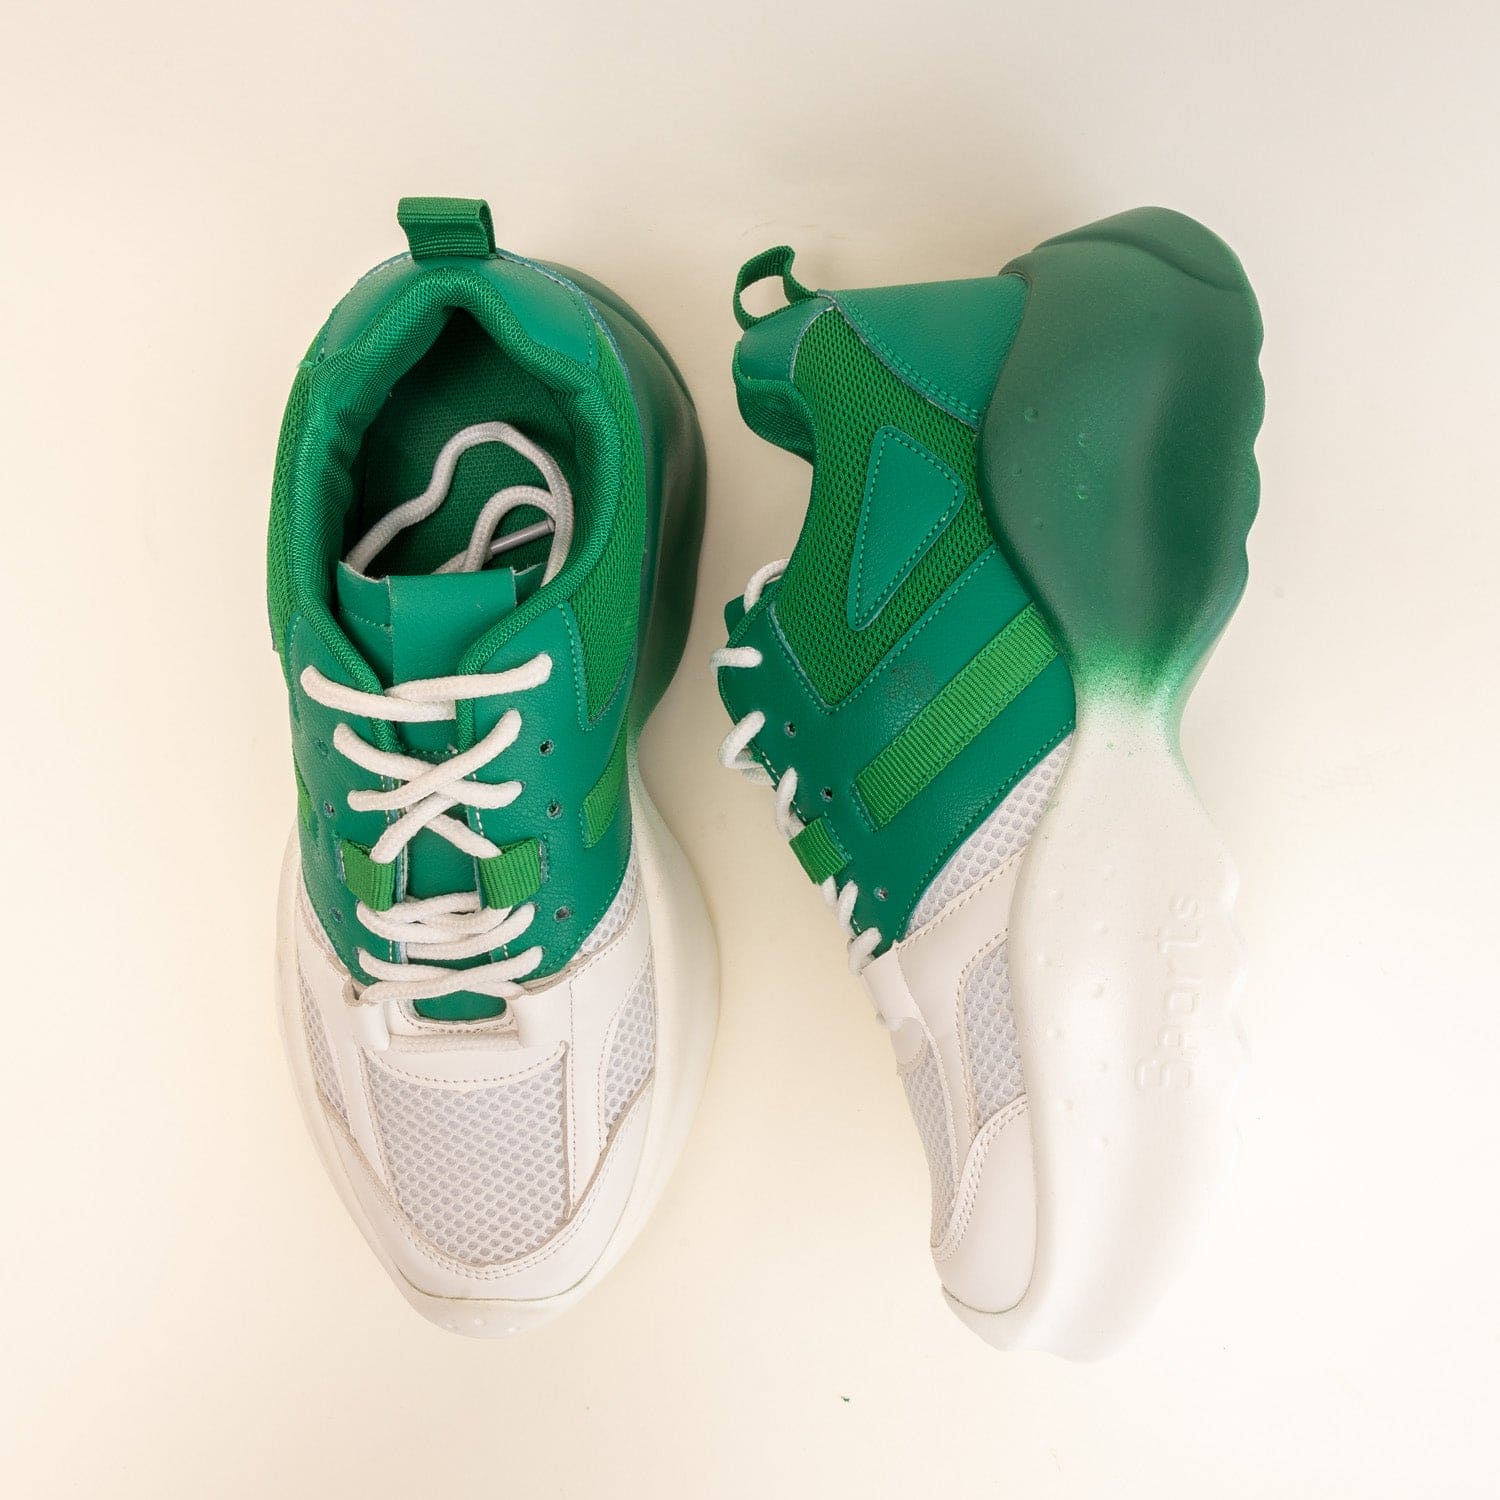 HALF STUD-Sport Shoes in-Green.